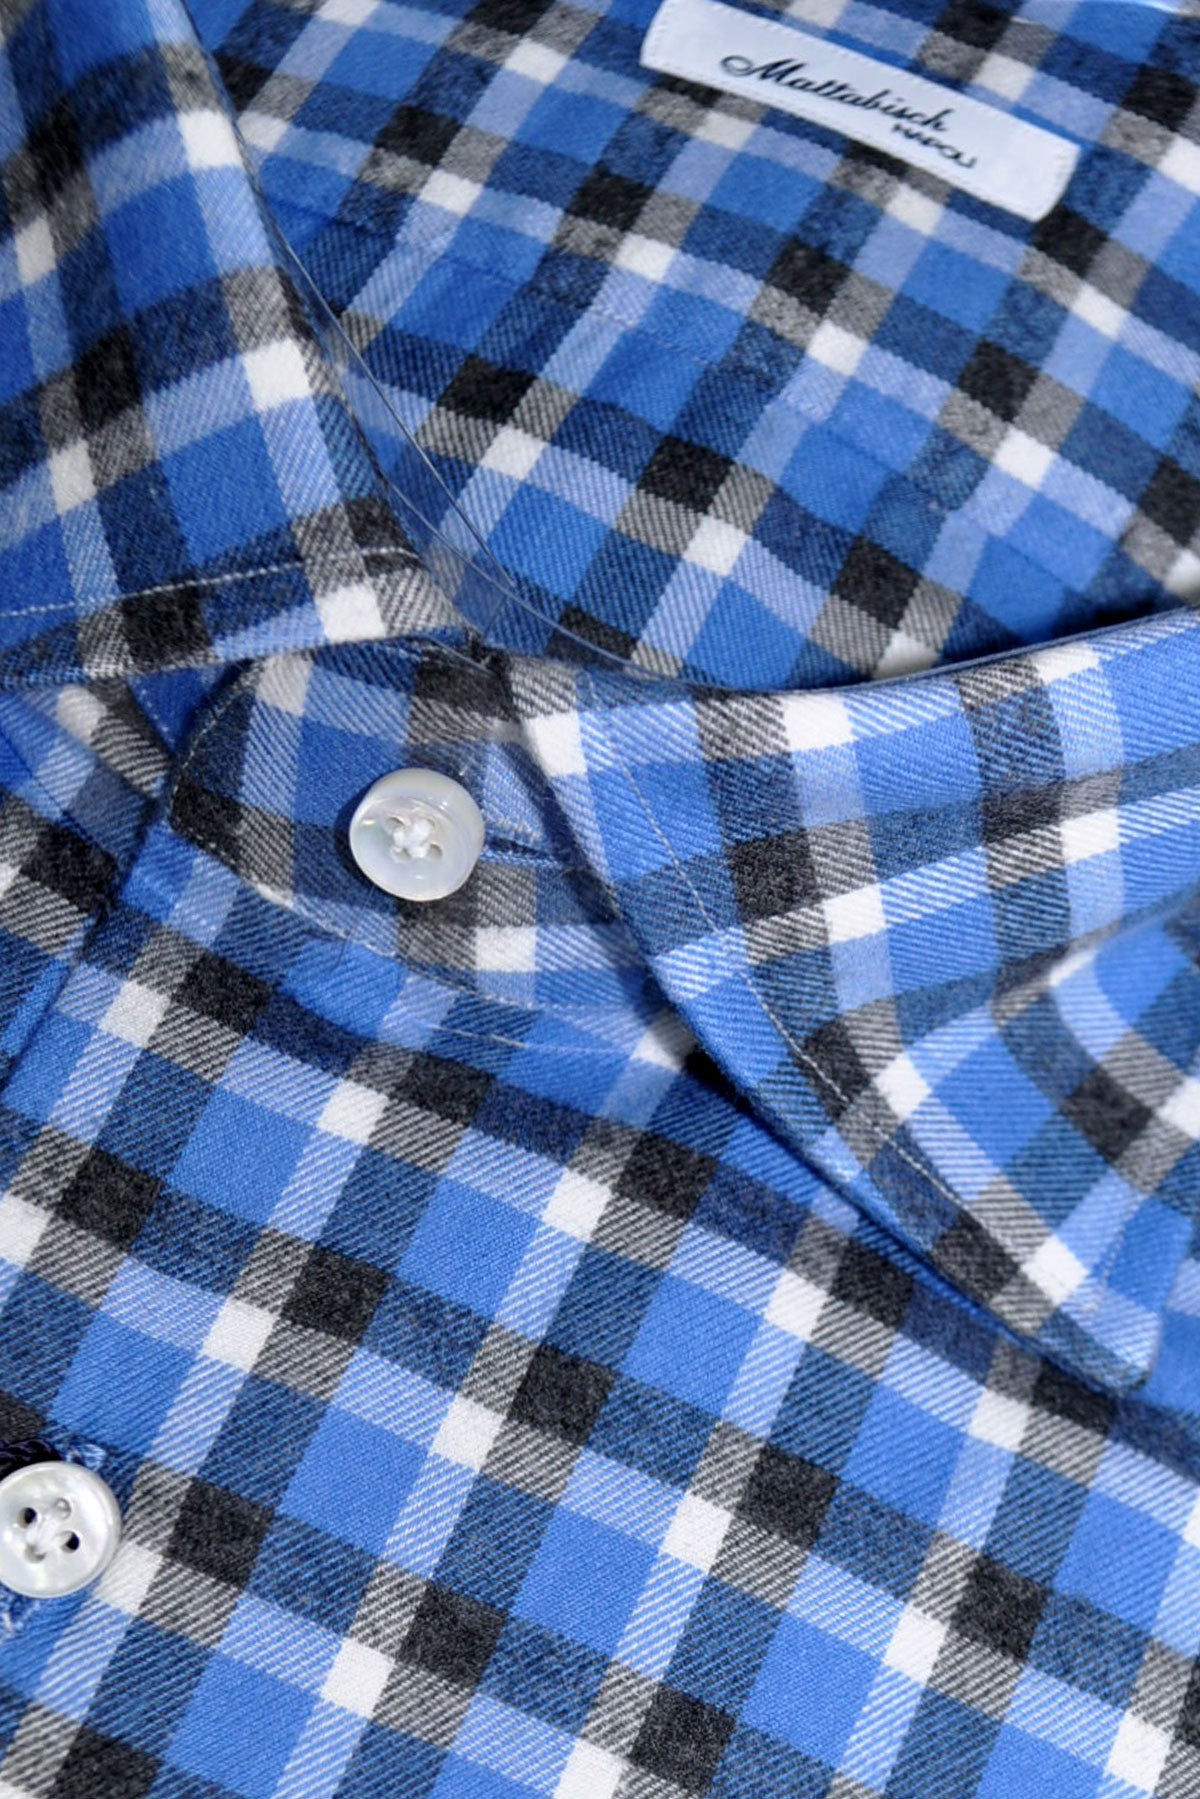 Mattabisch Sport Shirt Blue Gray Plaid Check - Flannel Cotton 